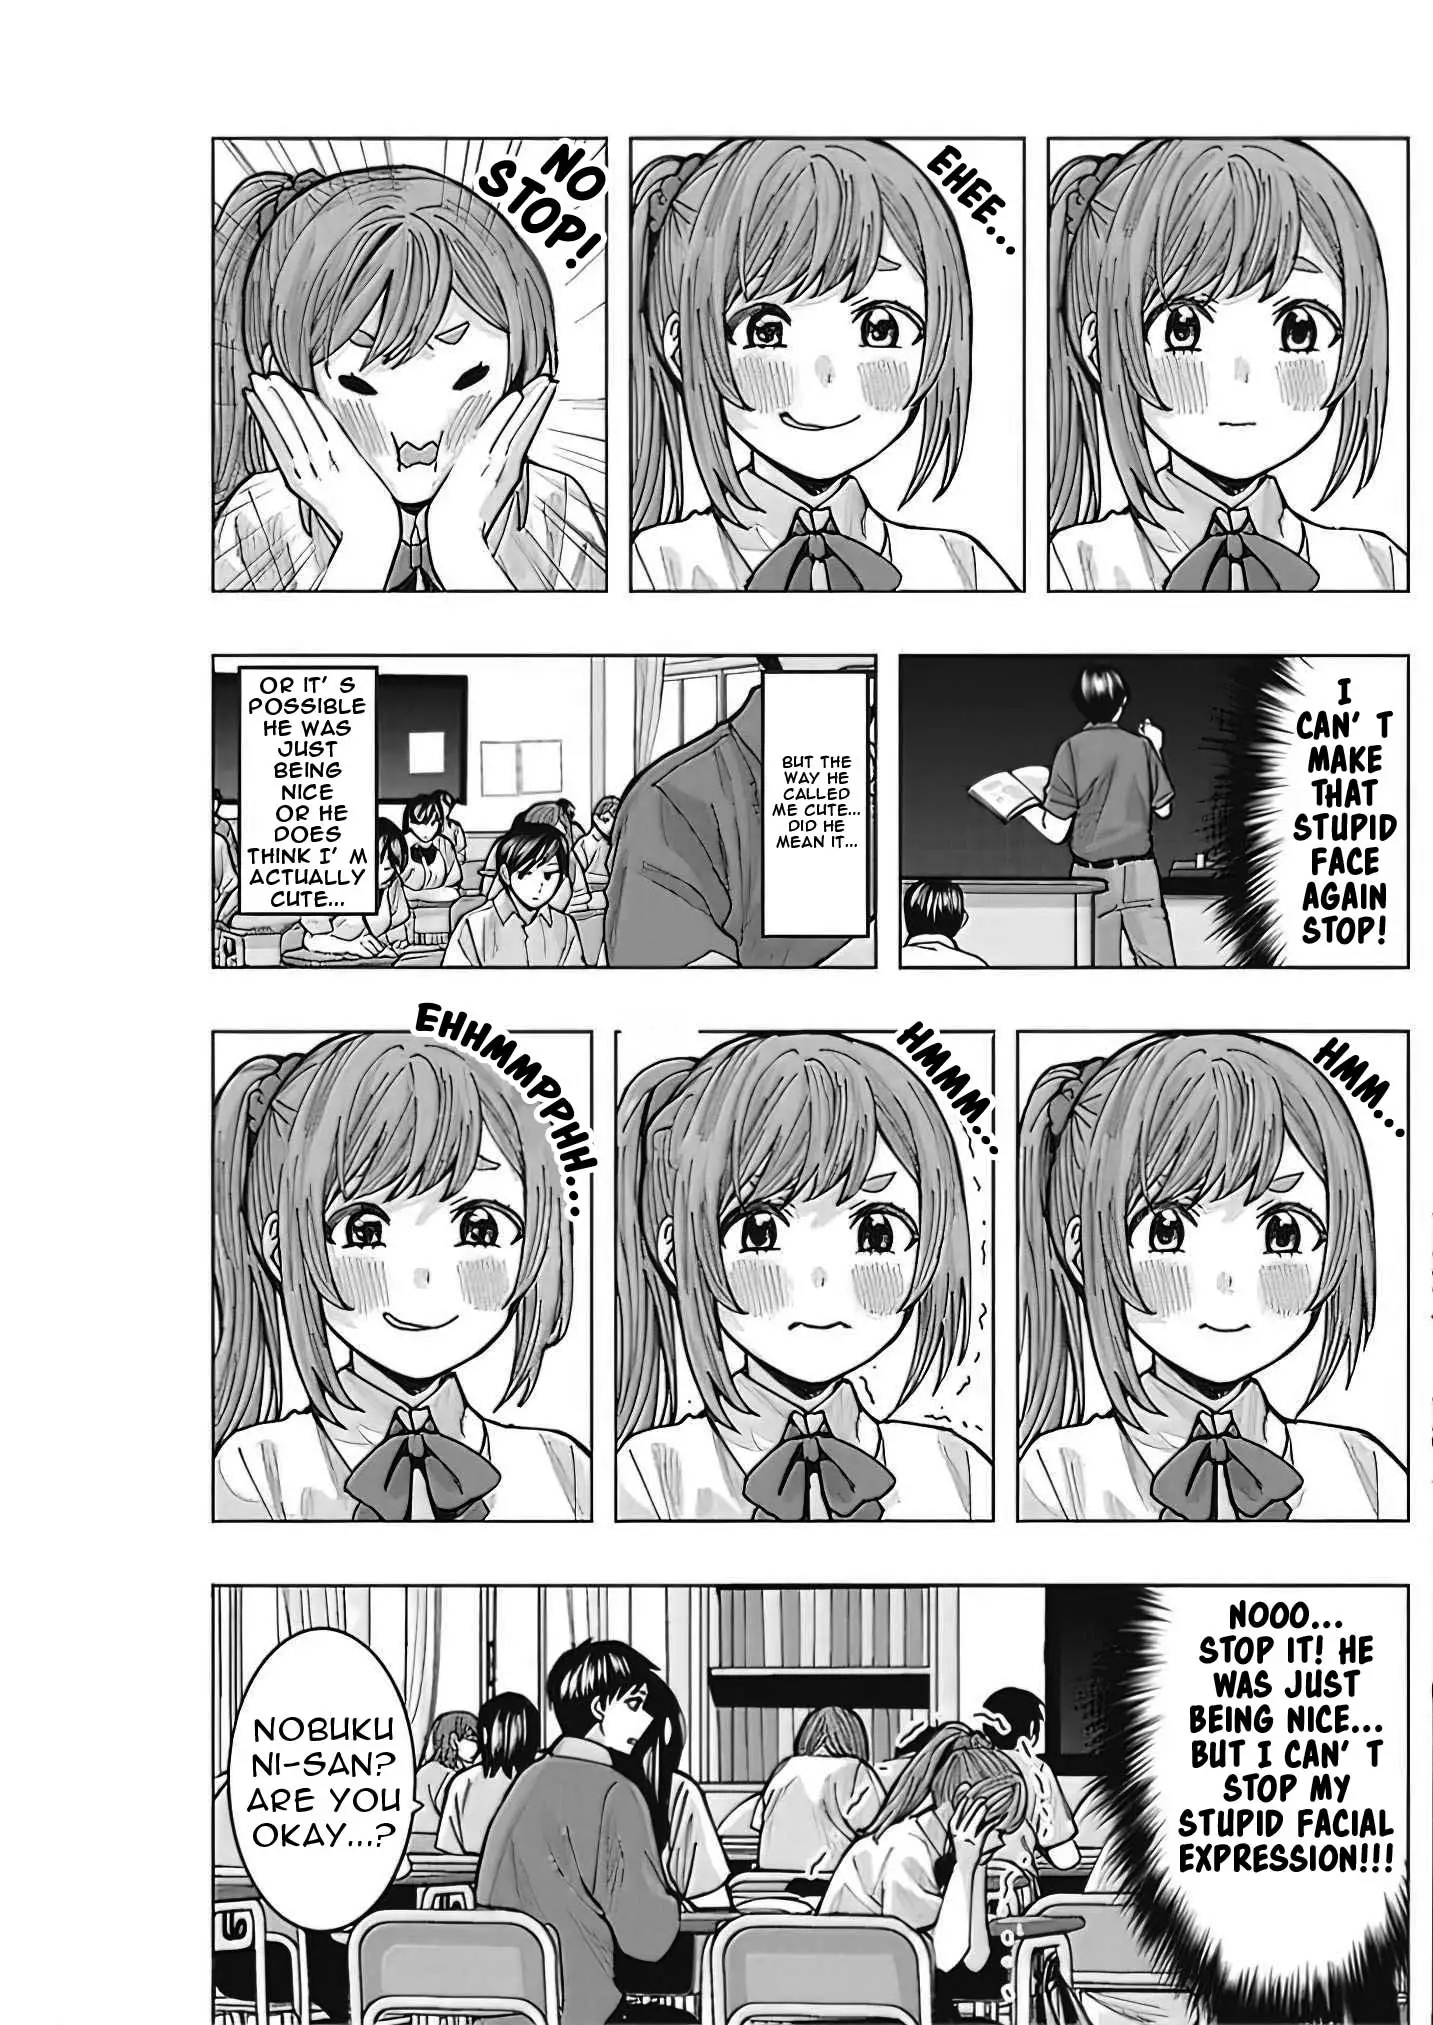 "nobukuni-San" Does She Like Me? - 3 page 12